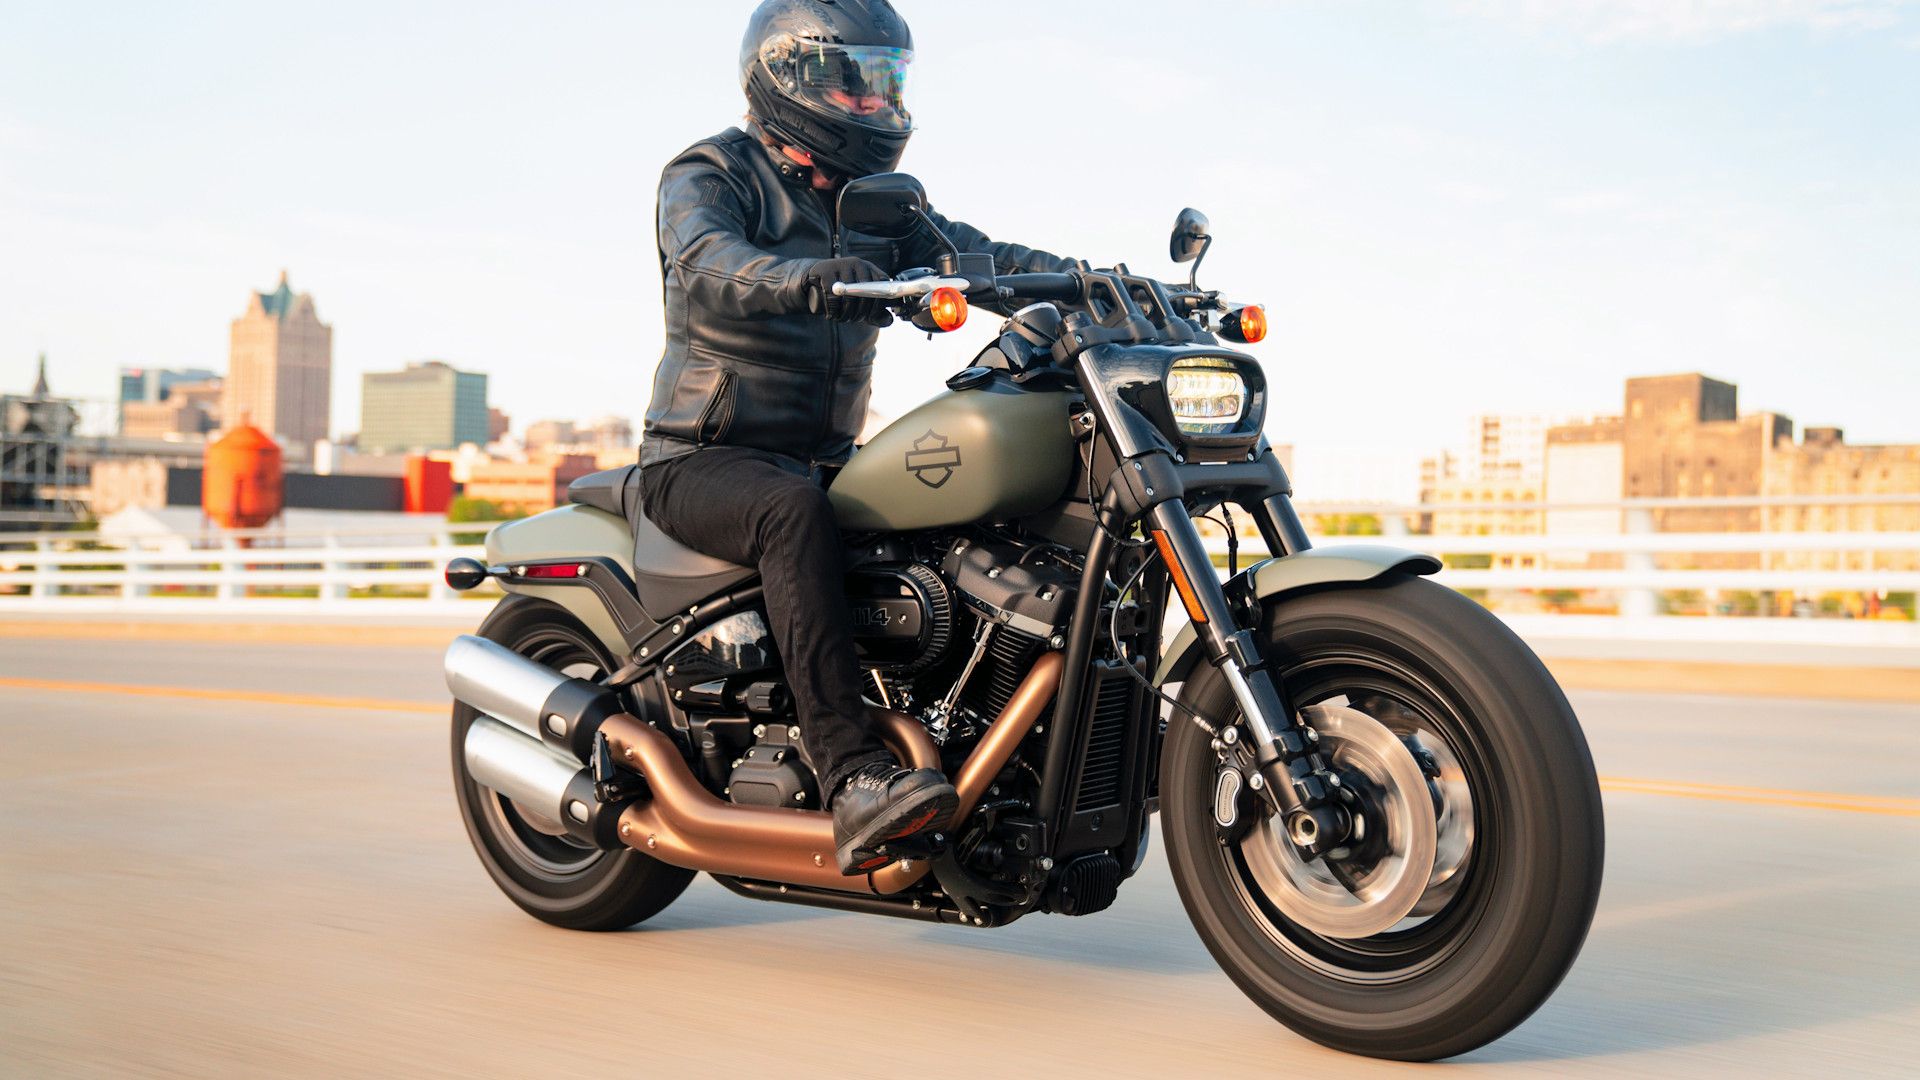 Hijau 2021 Harley-Davidson Fat Bob 114 berjalan di jalan